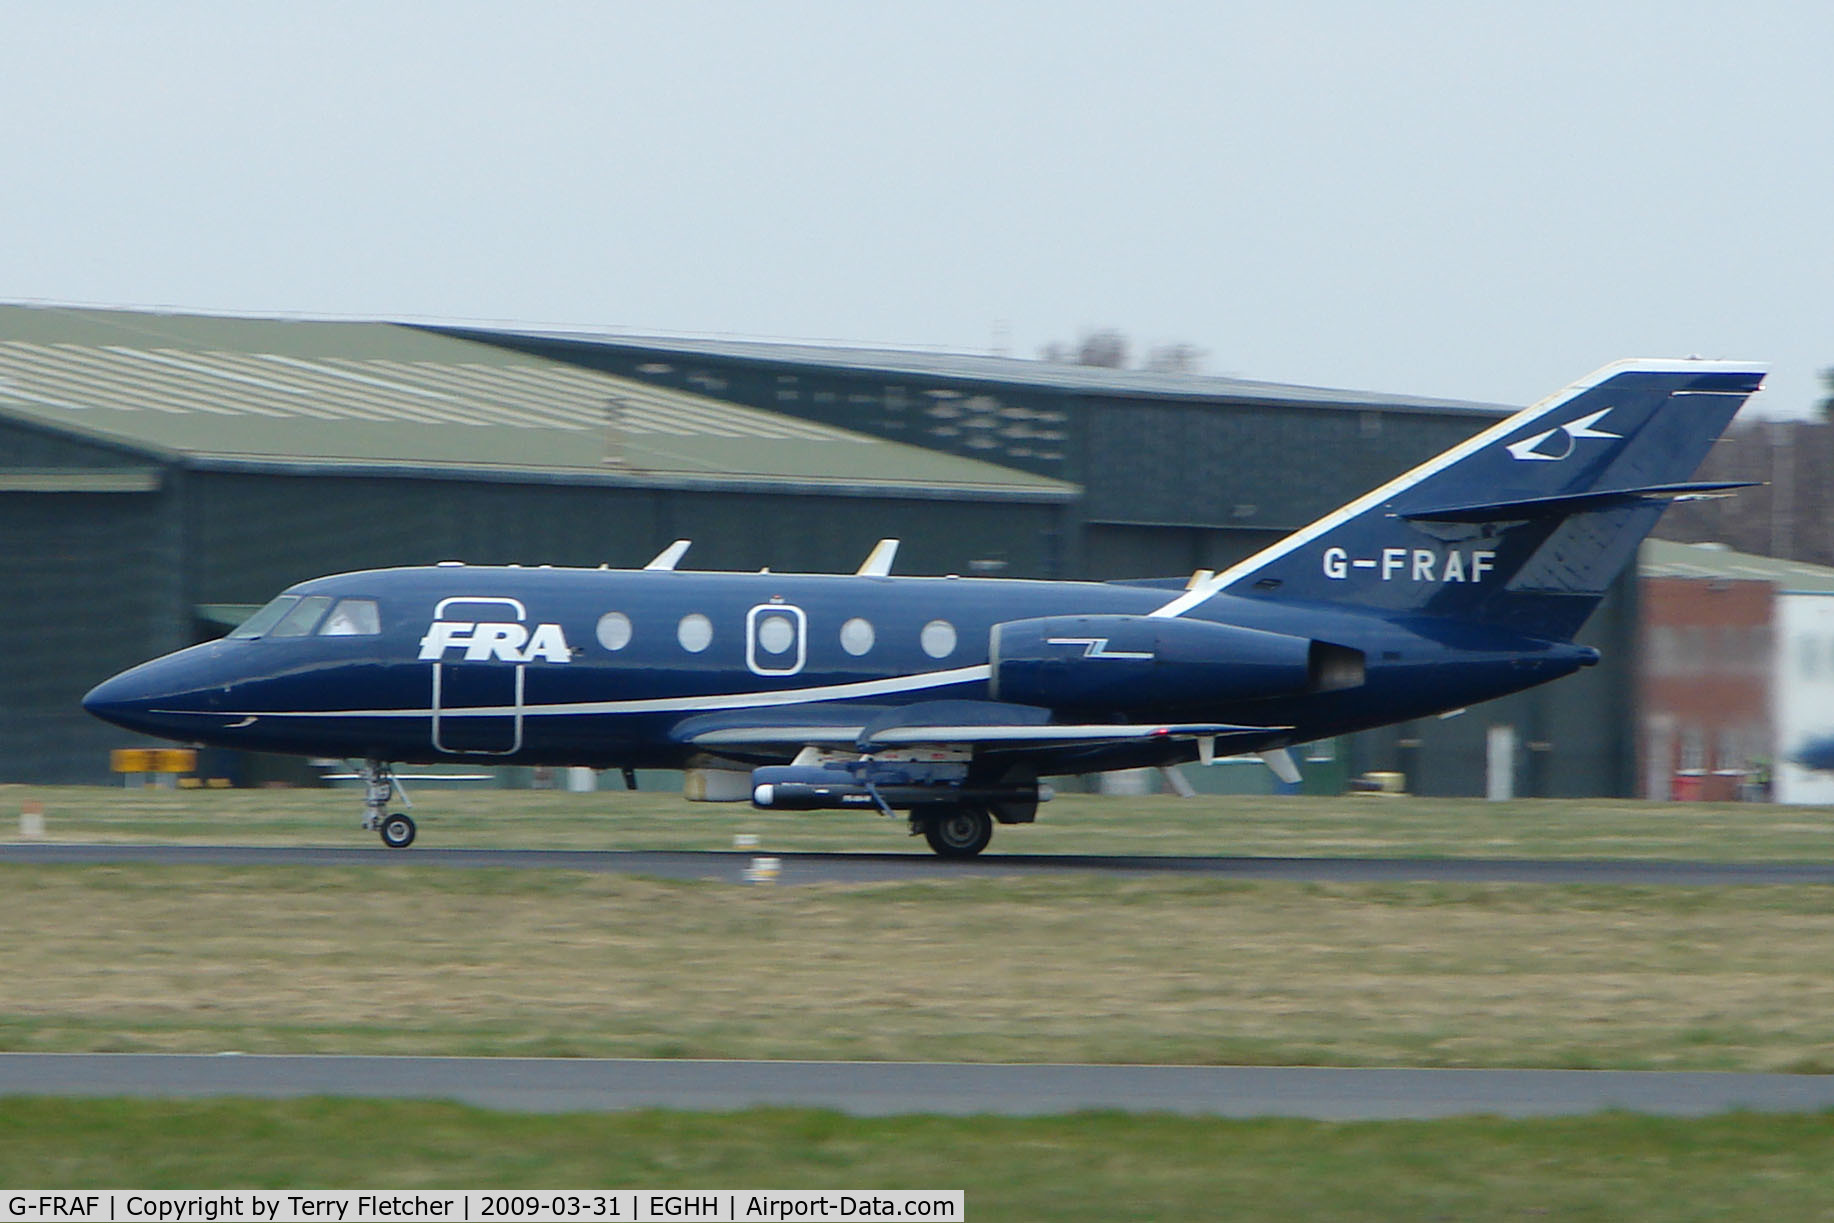 G-FRAF, 1974 Dassault Falcon (Mystere) 20E C/N 295, FRA Falcon 20 at Bournemouth